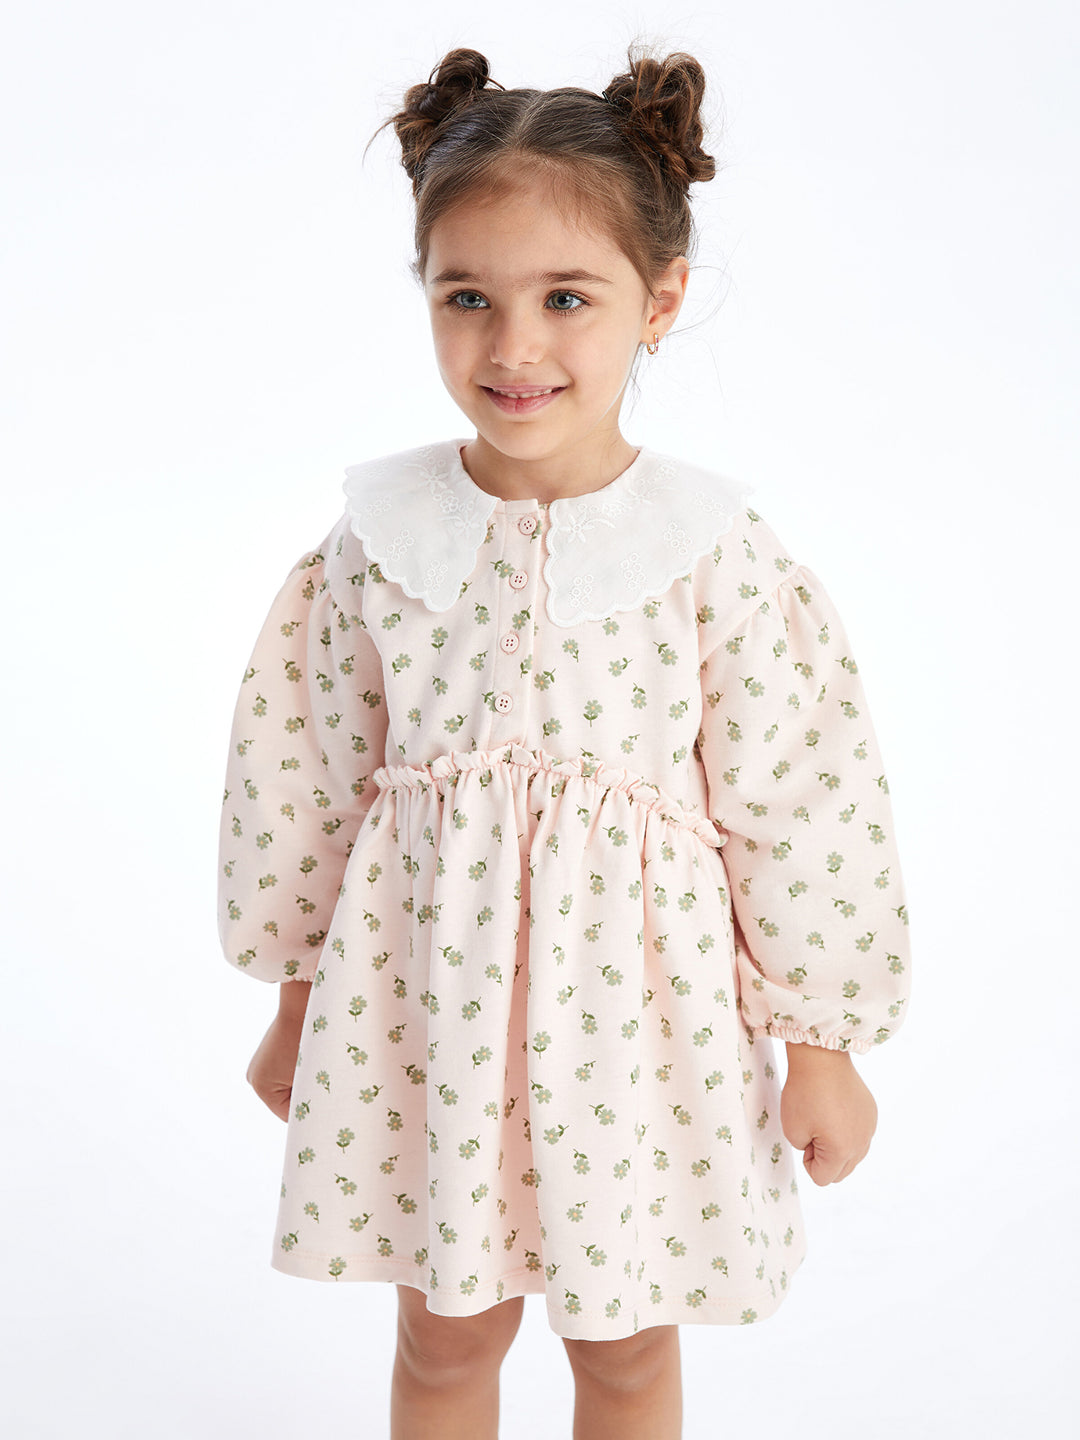 Bebe Collar Short Sleeve Floral Patterned Baby Girls Dress